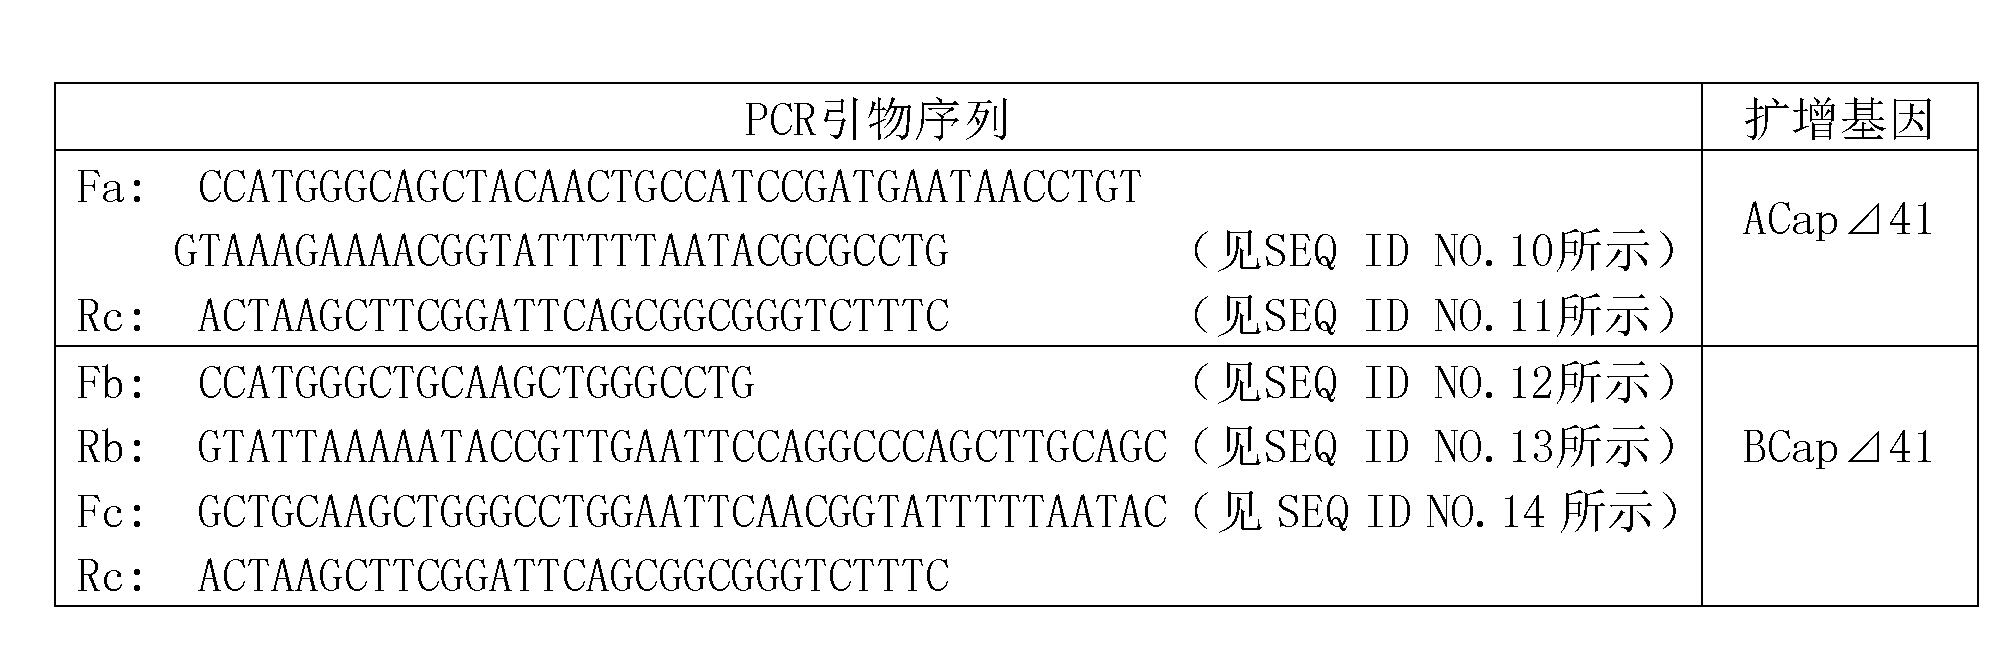 Method for preparing ELISA (enzyme-linked immuno sorbent assay) enzyme-labelled antigen through utilizing avidin binding peptide and avidin combining principle